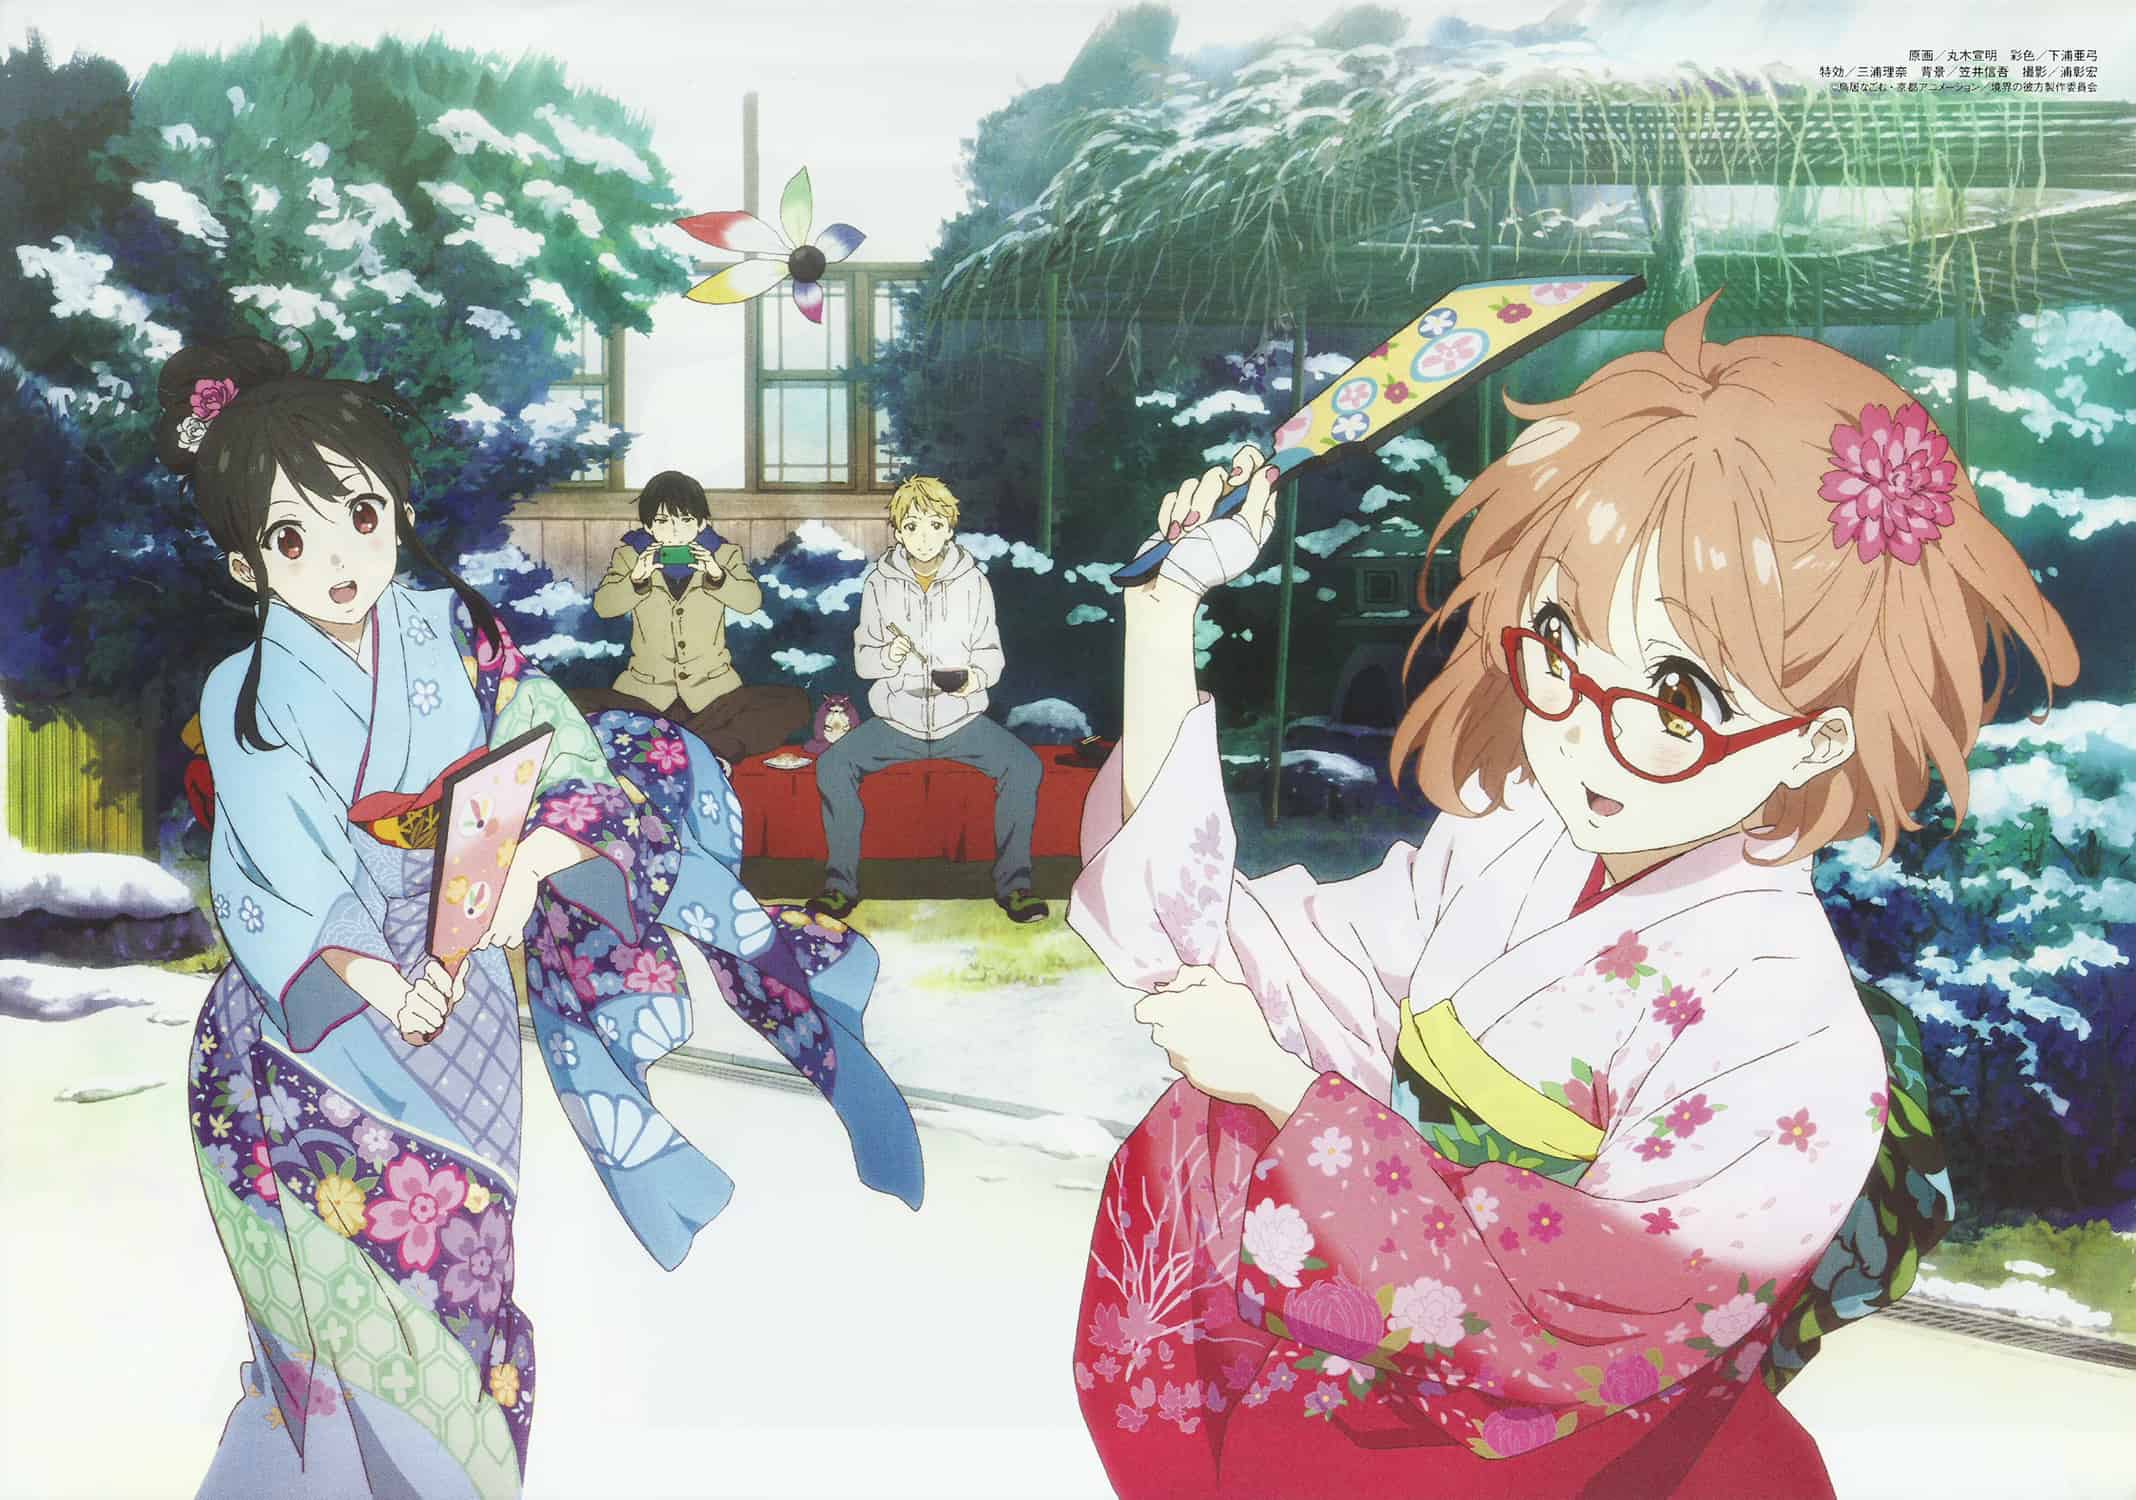 Kyoukai no Kanata (Beyond the Boundary) Anime Review –